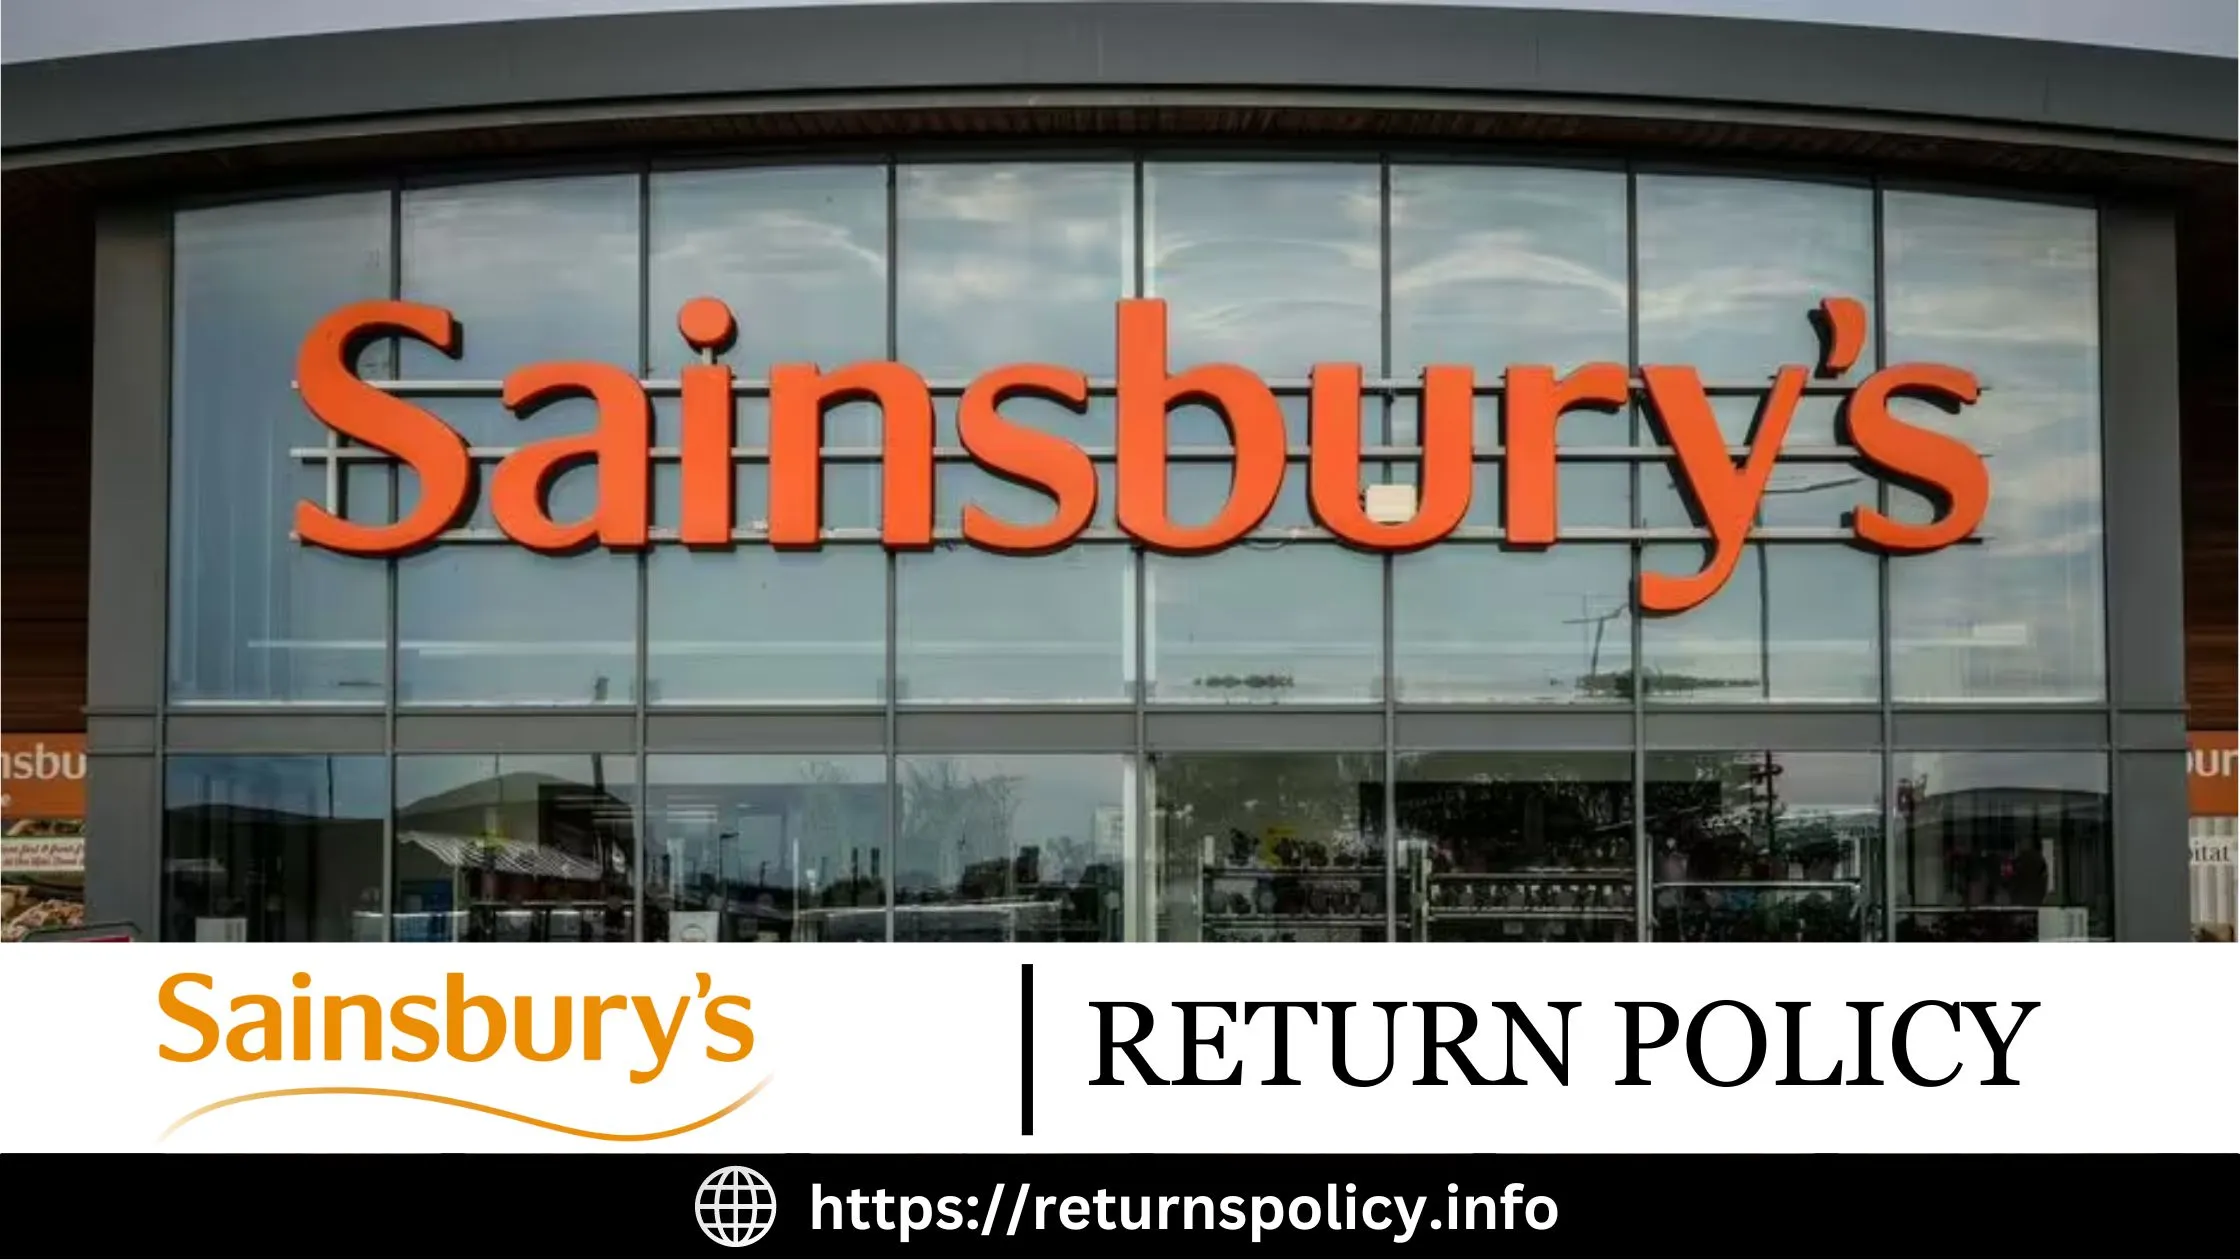 Sainsbury's Return Policy